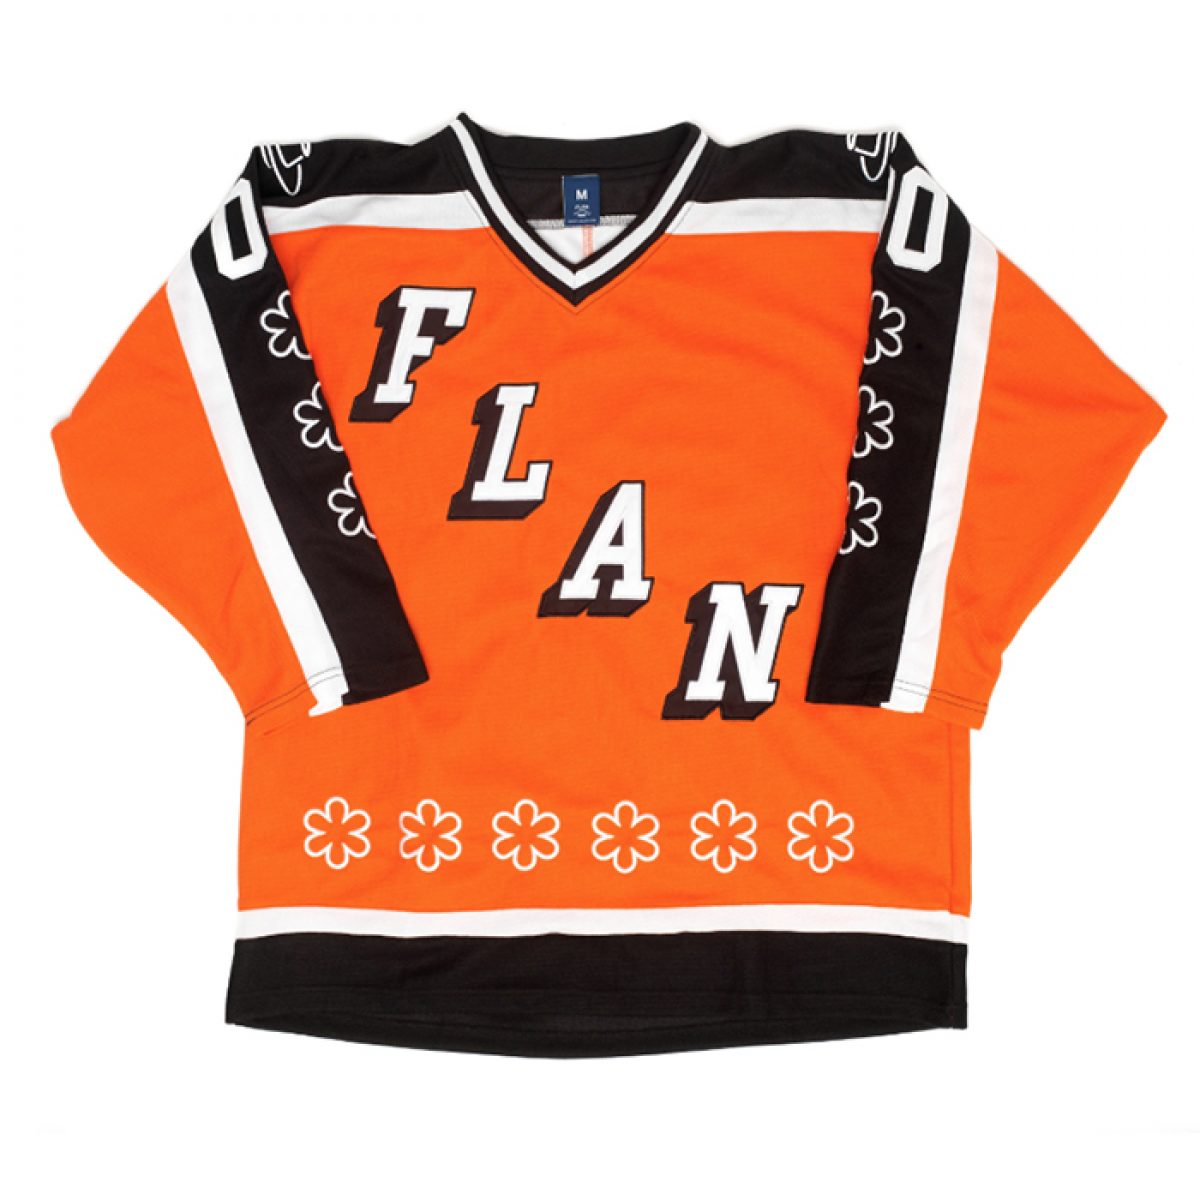 FLAN Hockey Jersey 2.0 - COOL HUNTING®